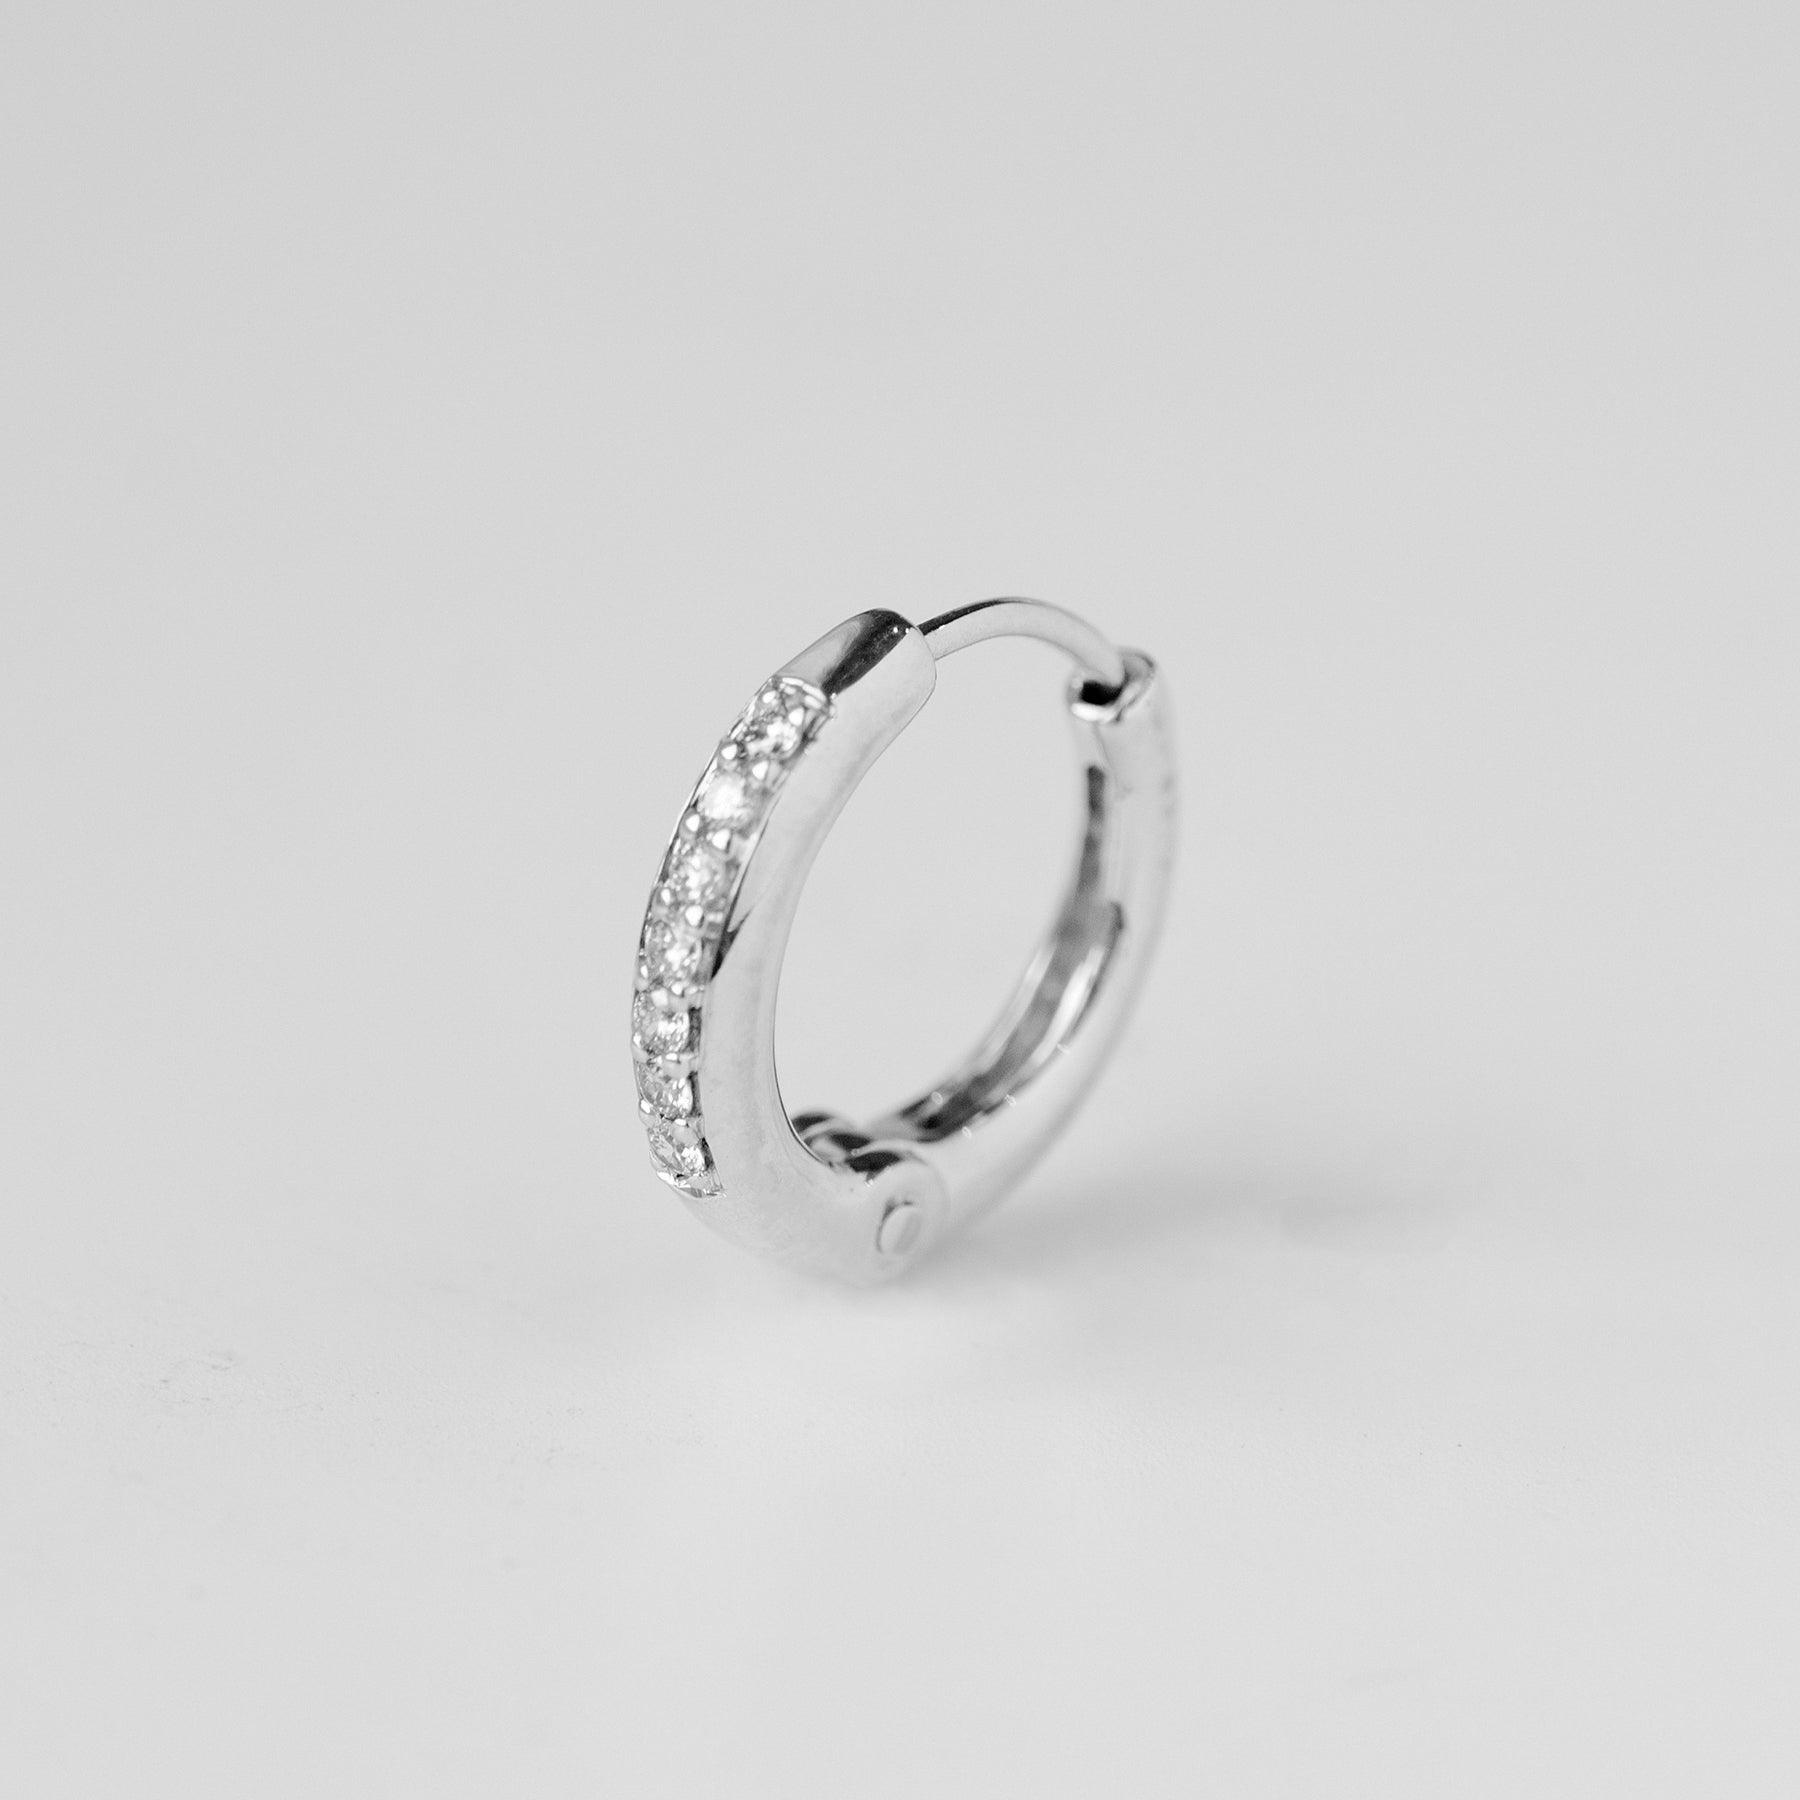 Buy Diti Platinum Diamond Nose Ring at Amazon.in